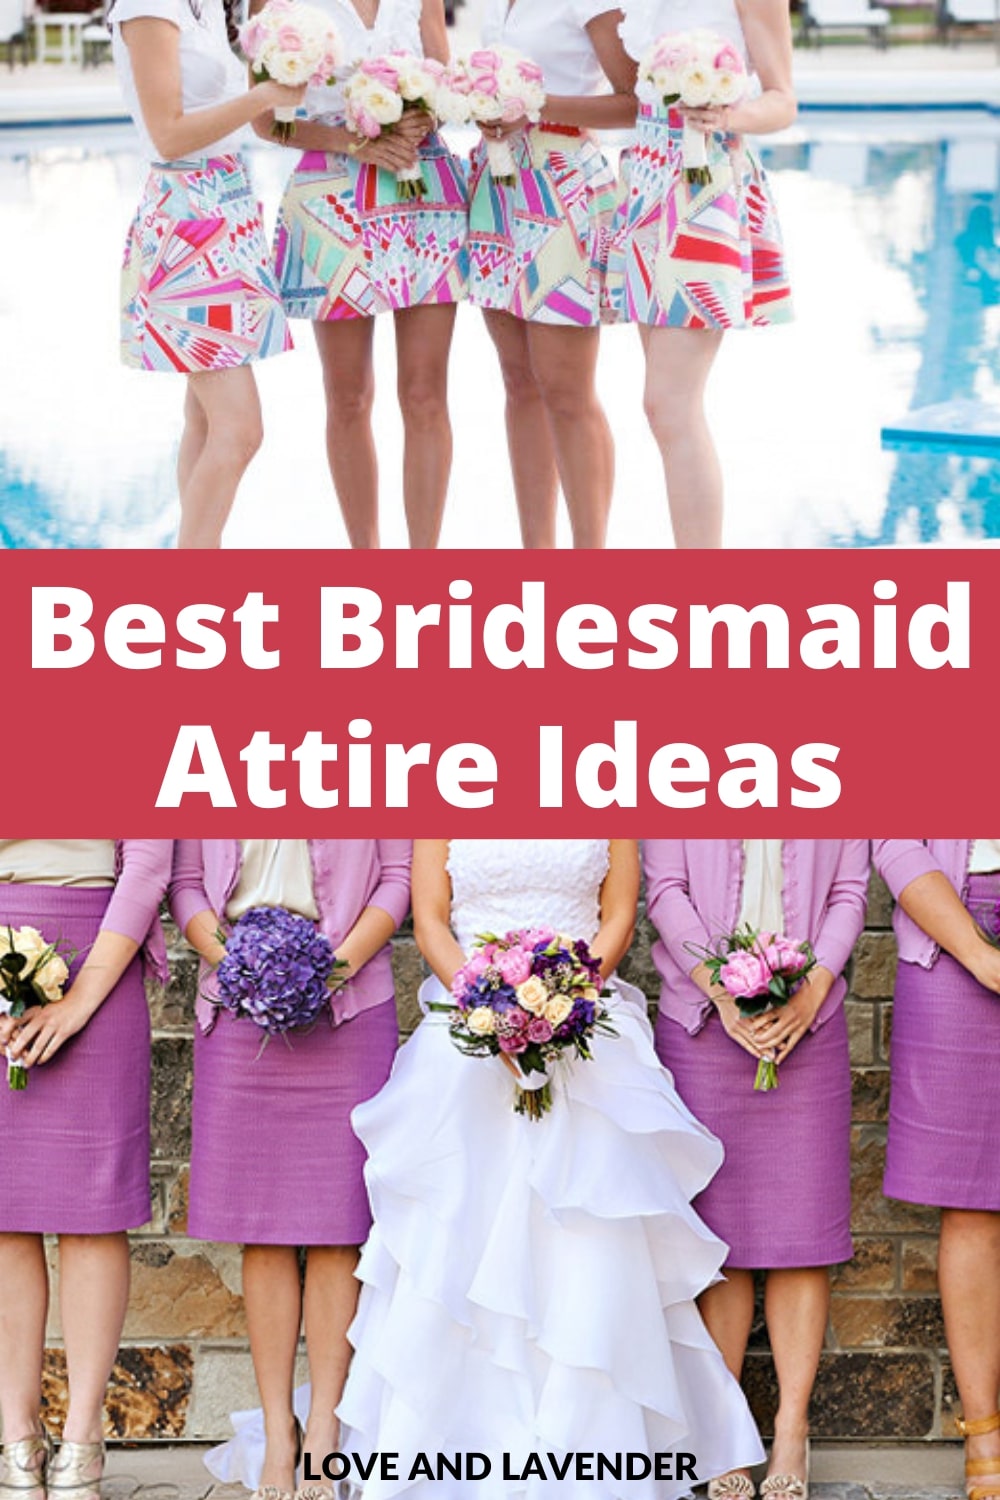 5 Bridesmaid Attire Inspirational Ideas Beyond the Norm